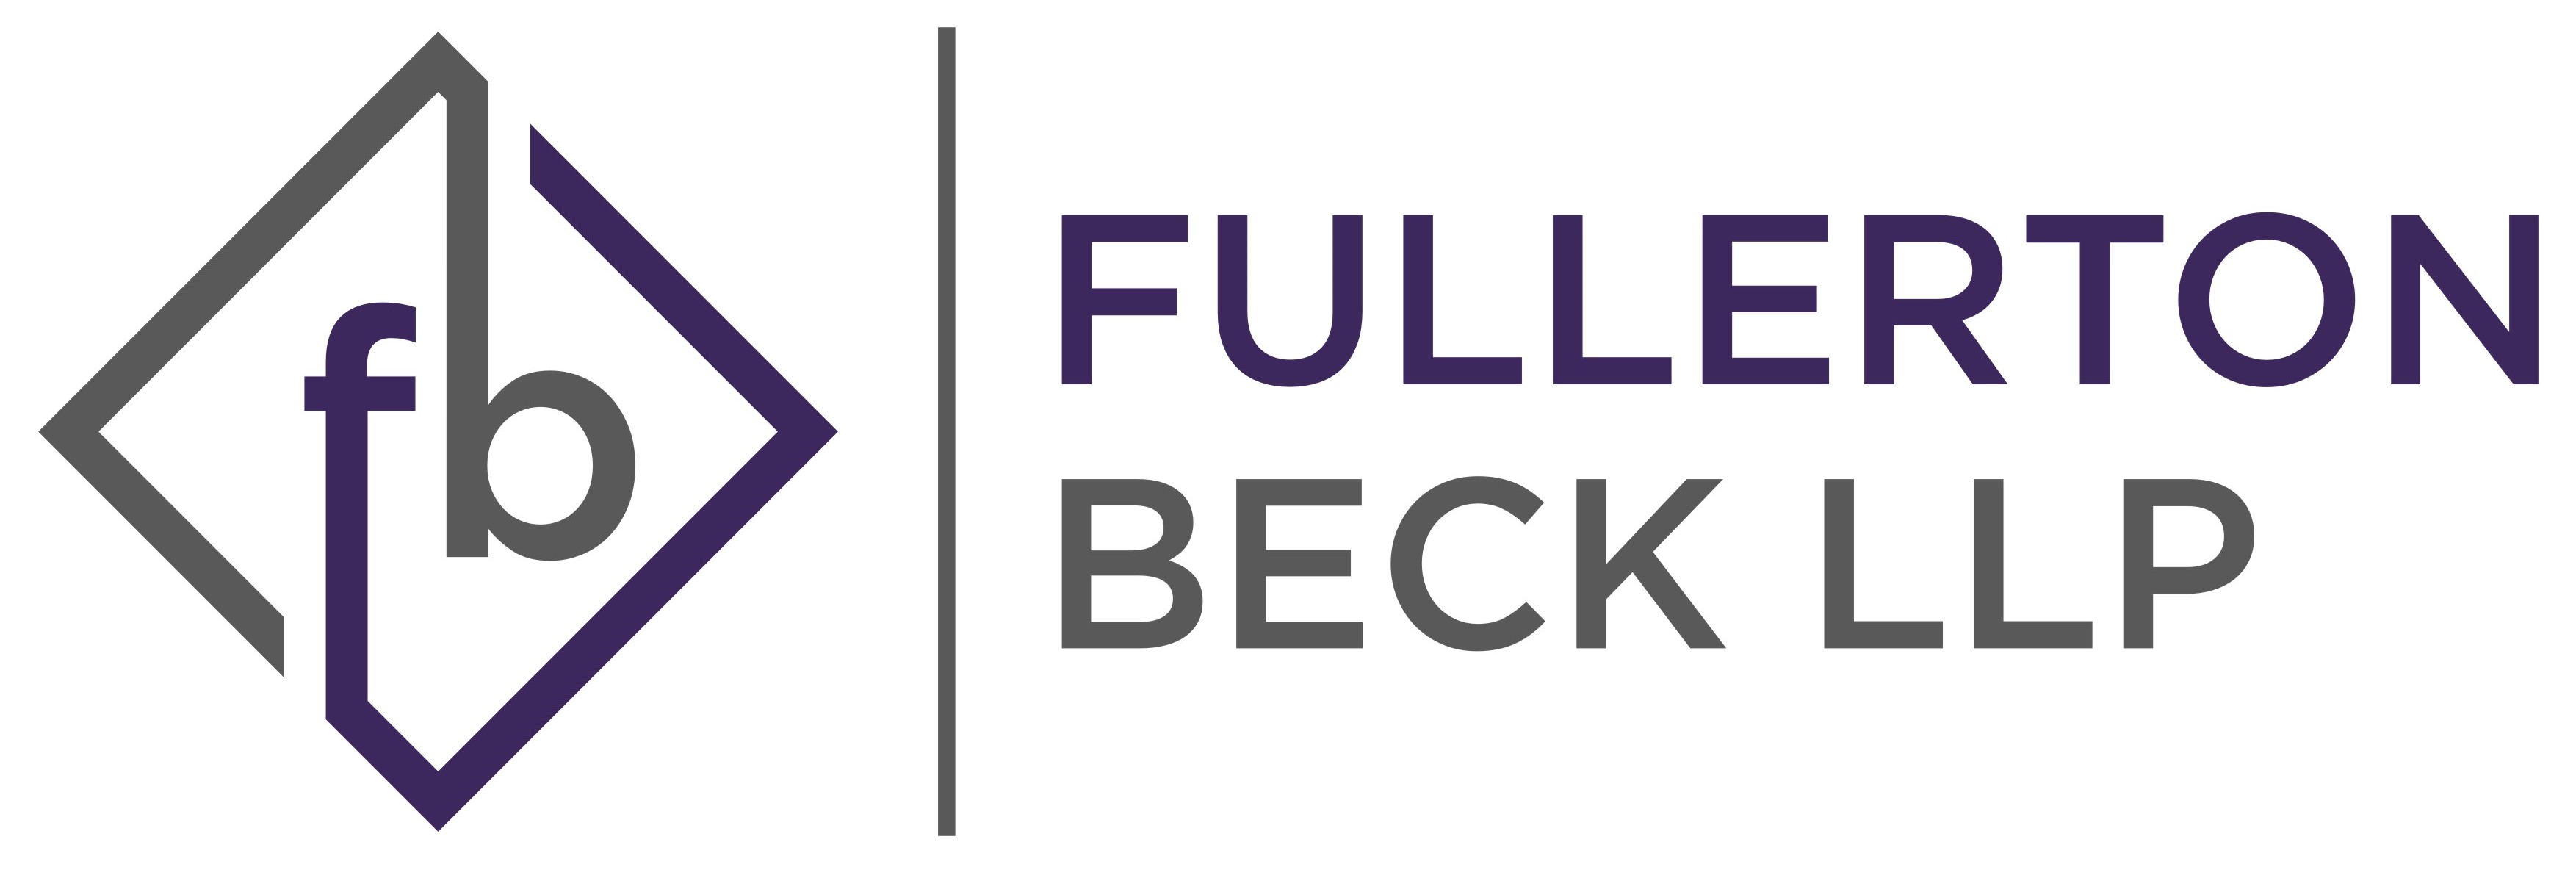 Fullerton Beck